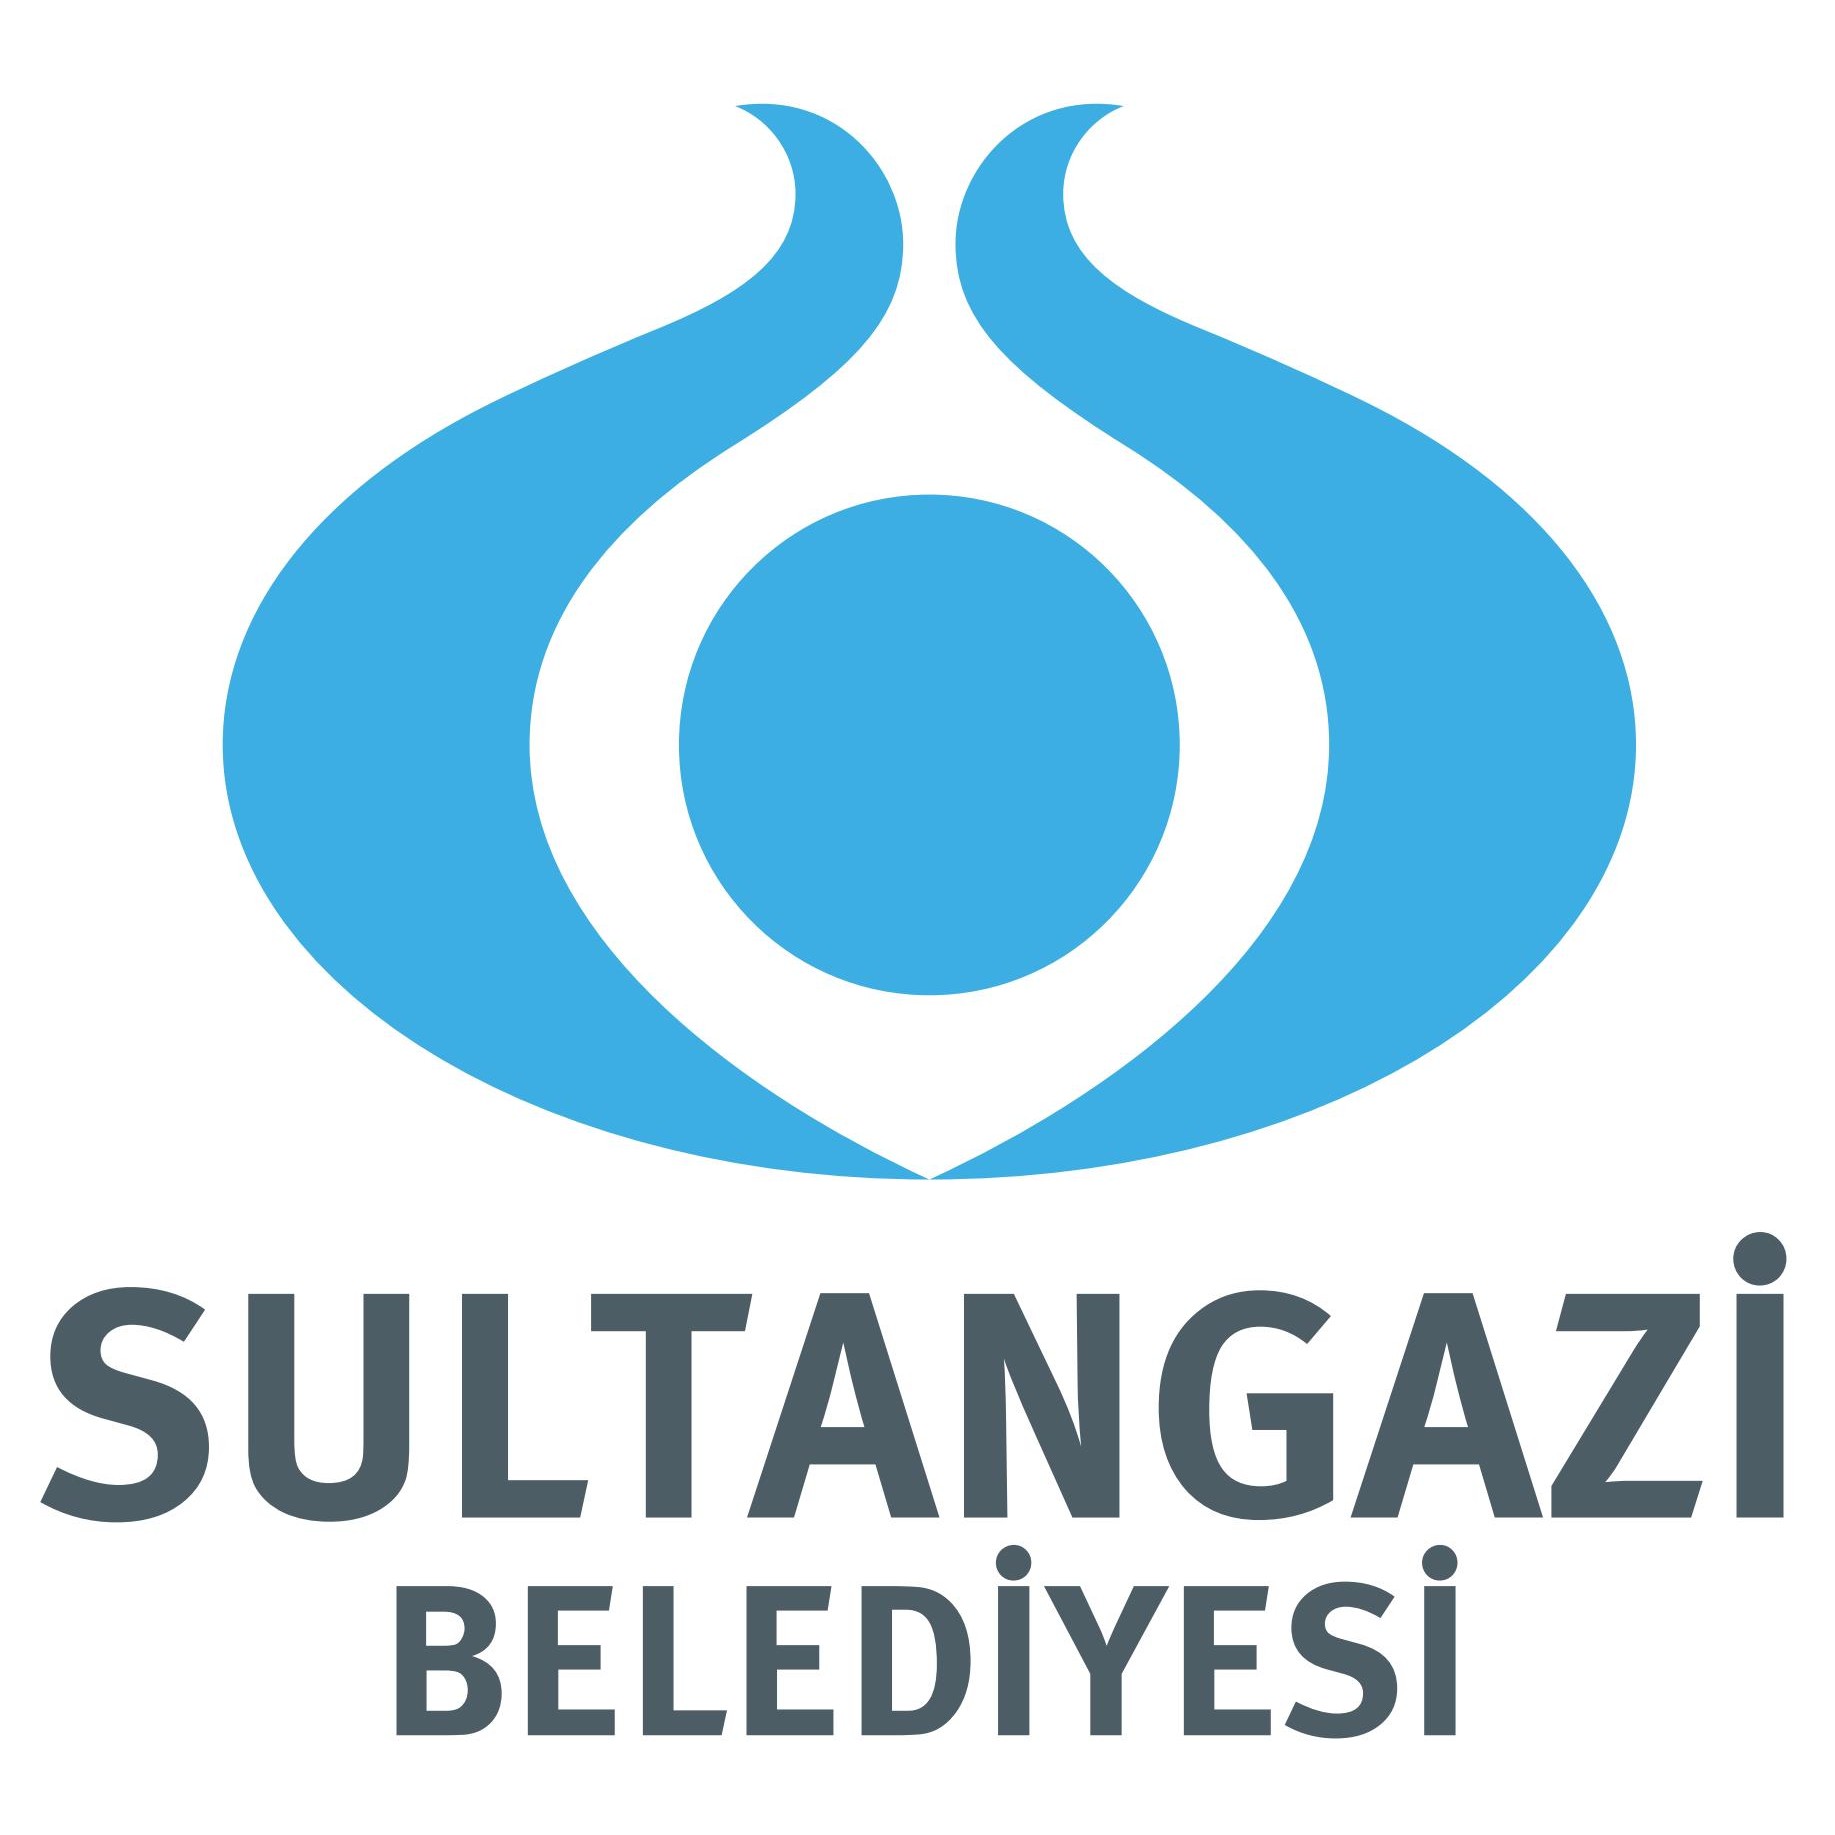 Sultangazi Belediyesi Logo photo - 1